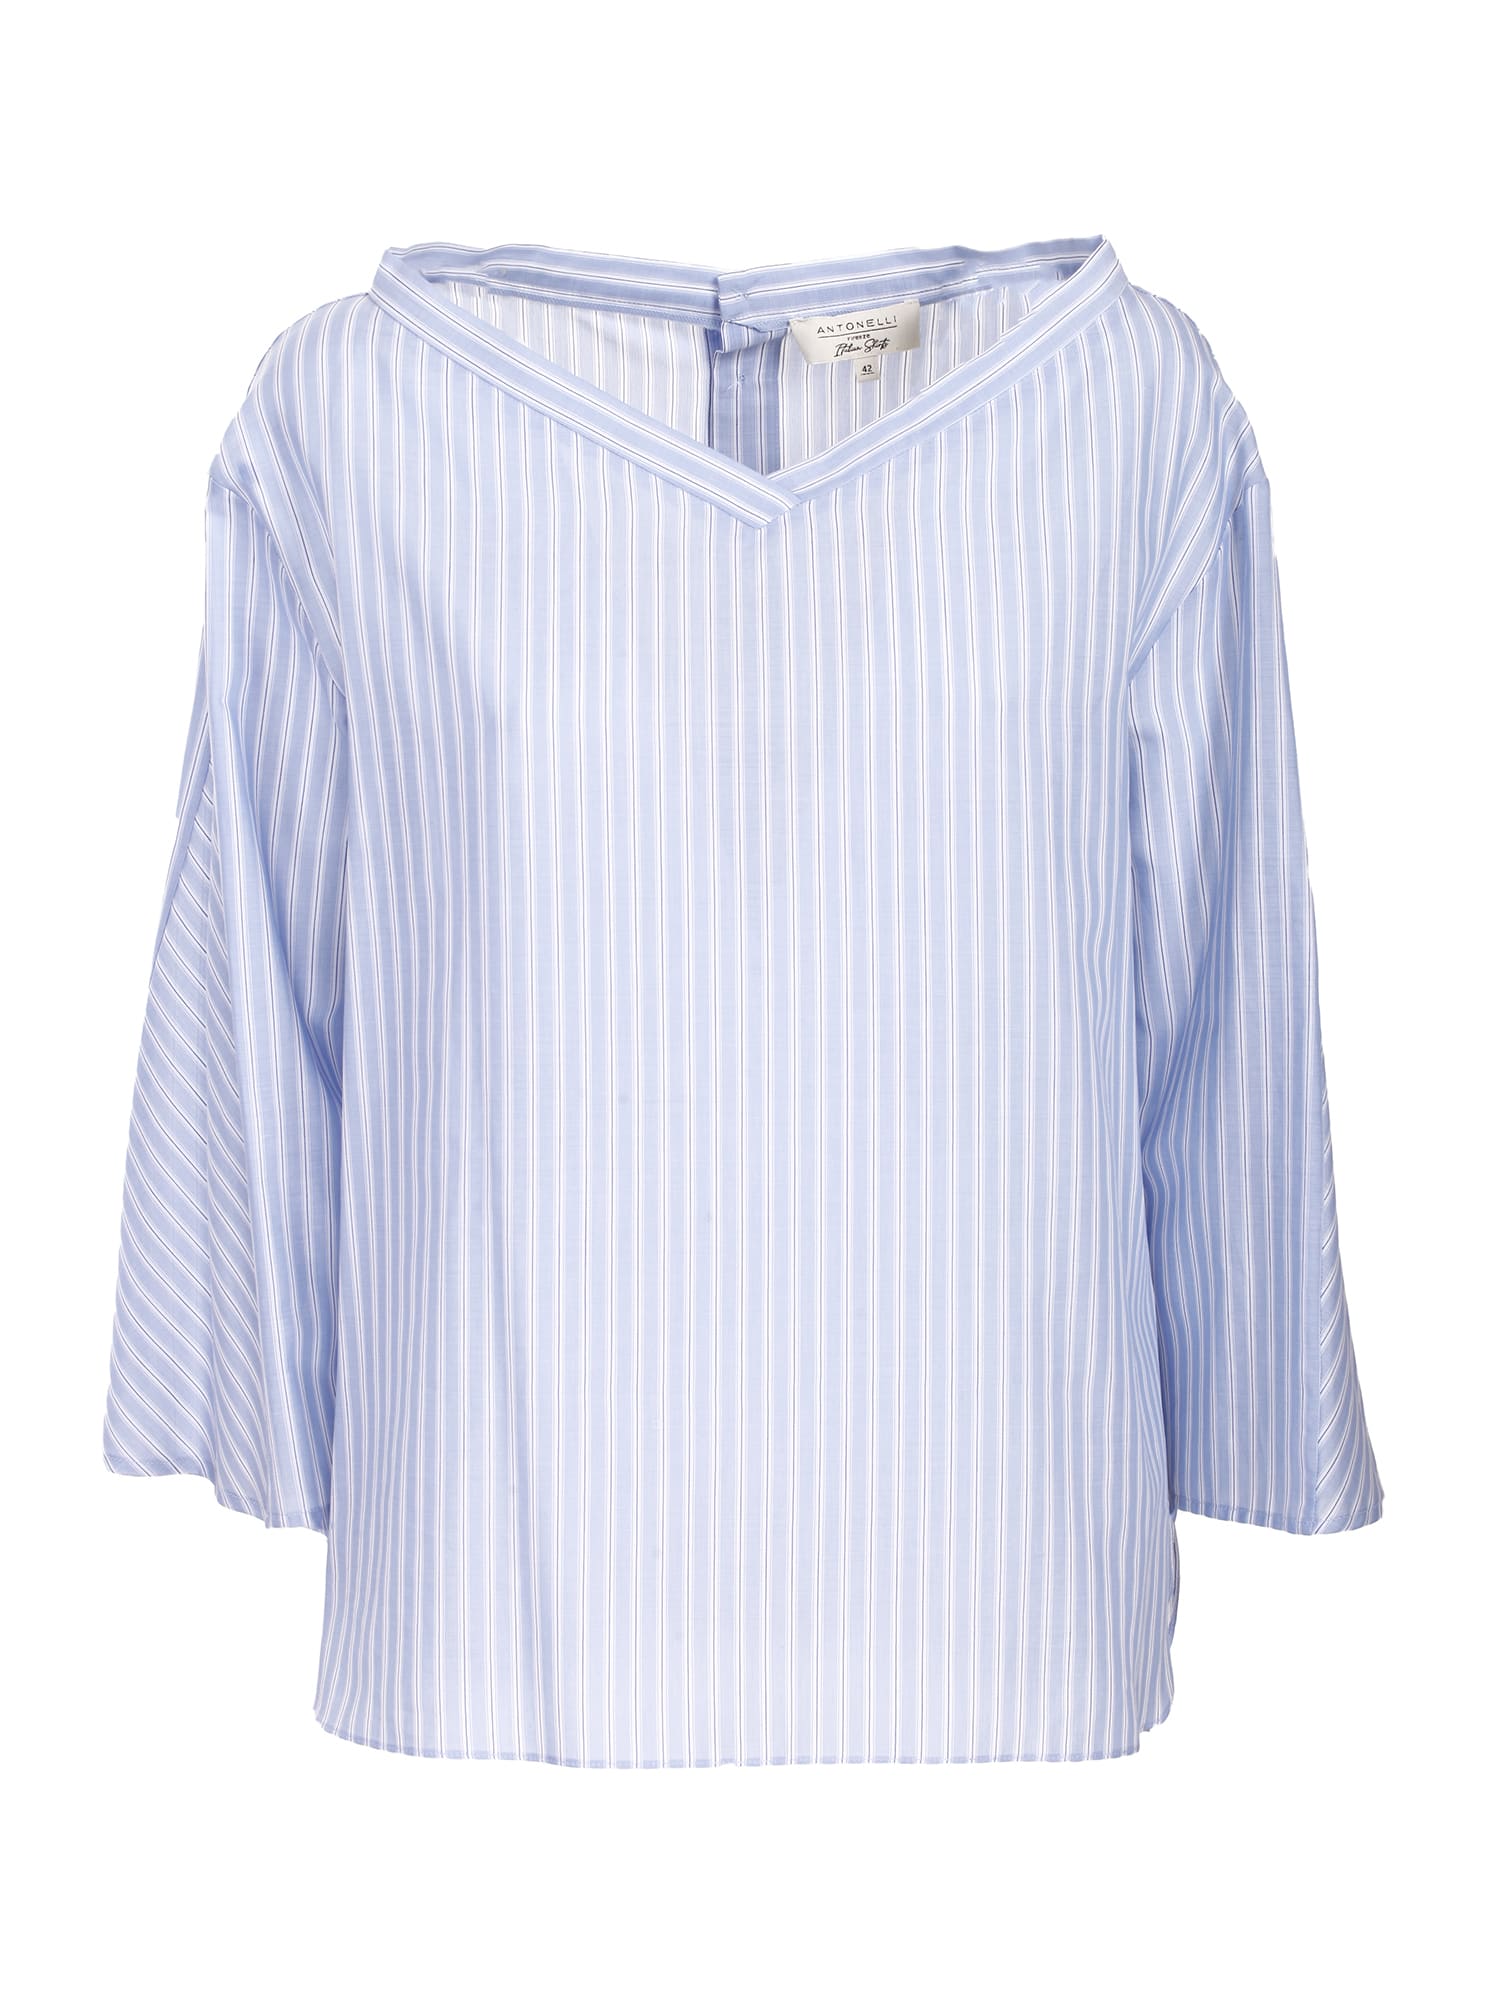 Antonelli white and light blue striped cotton shirt